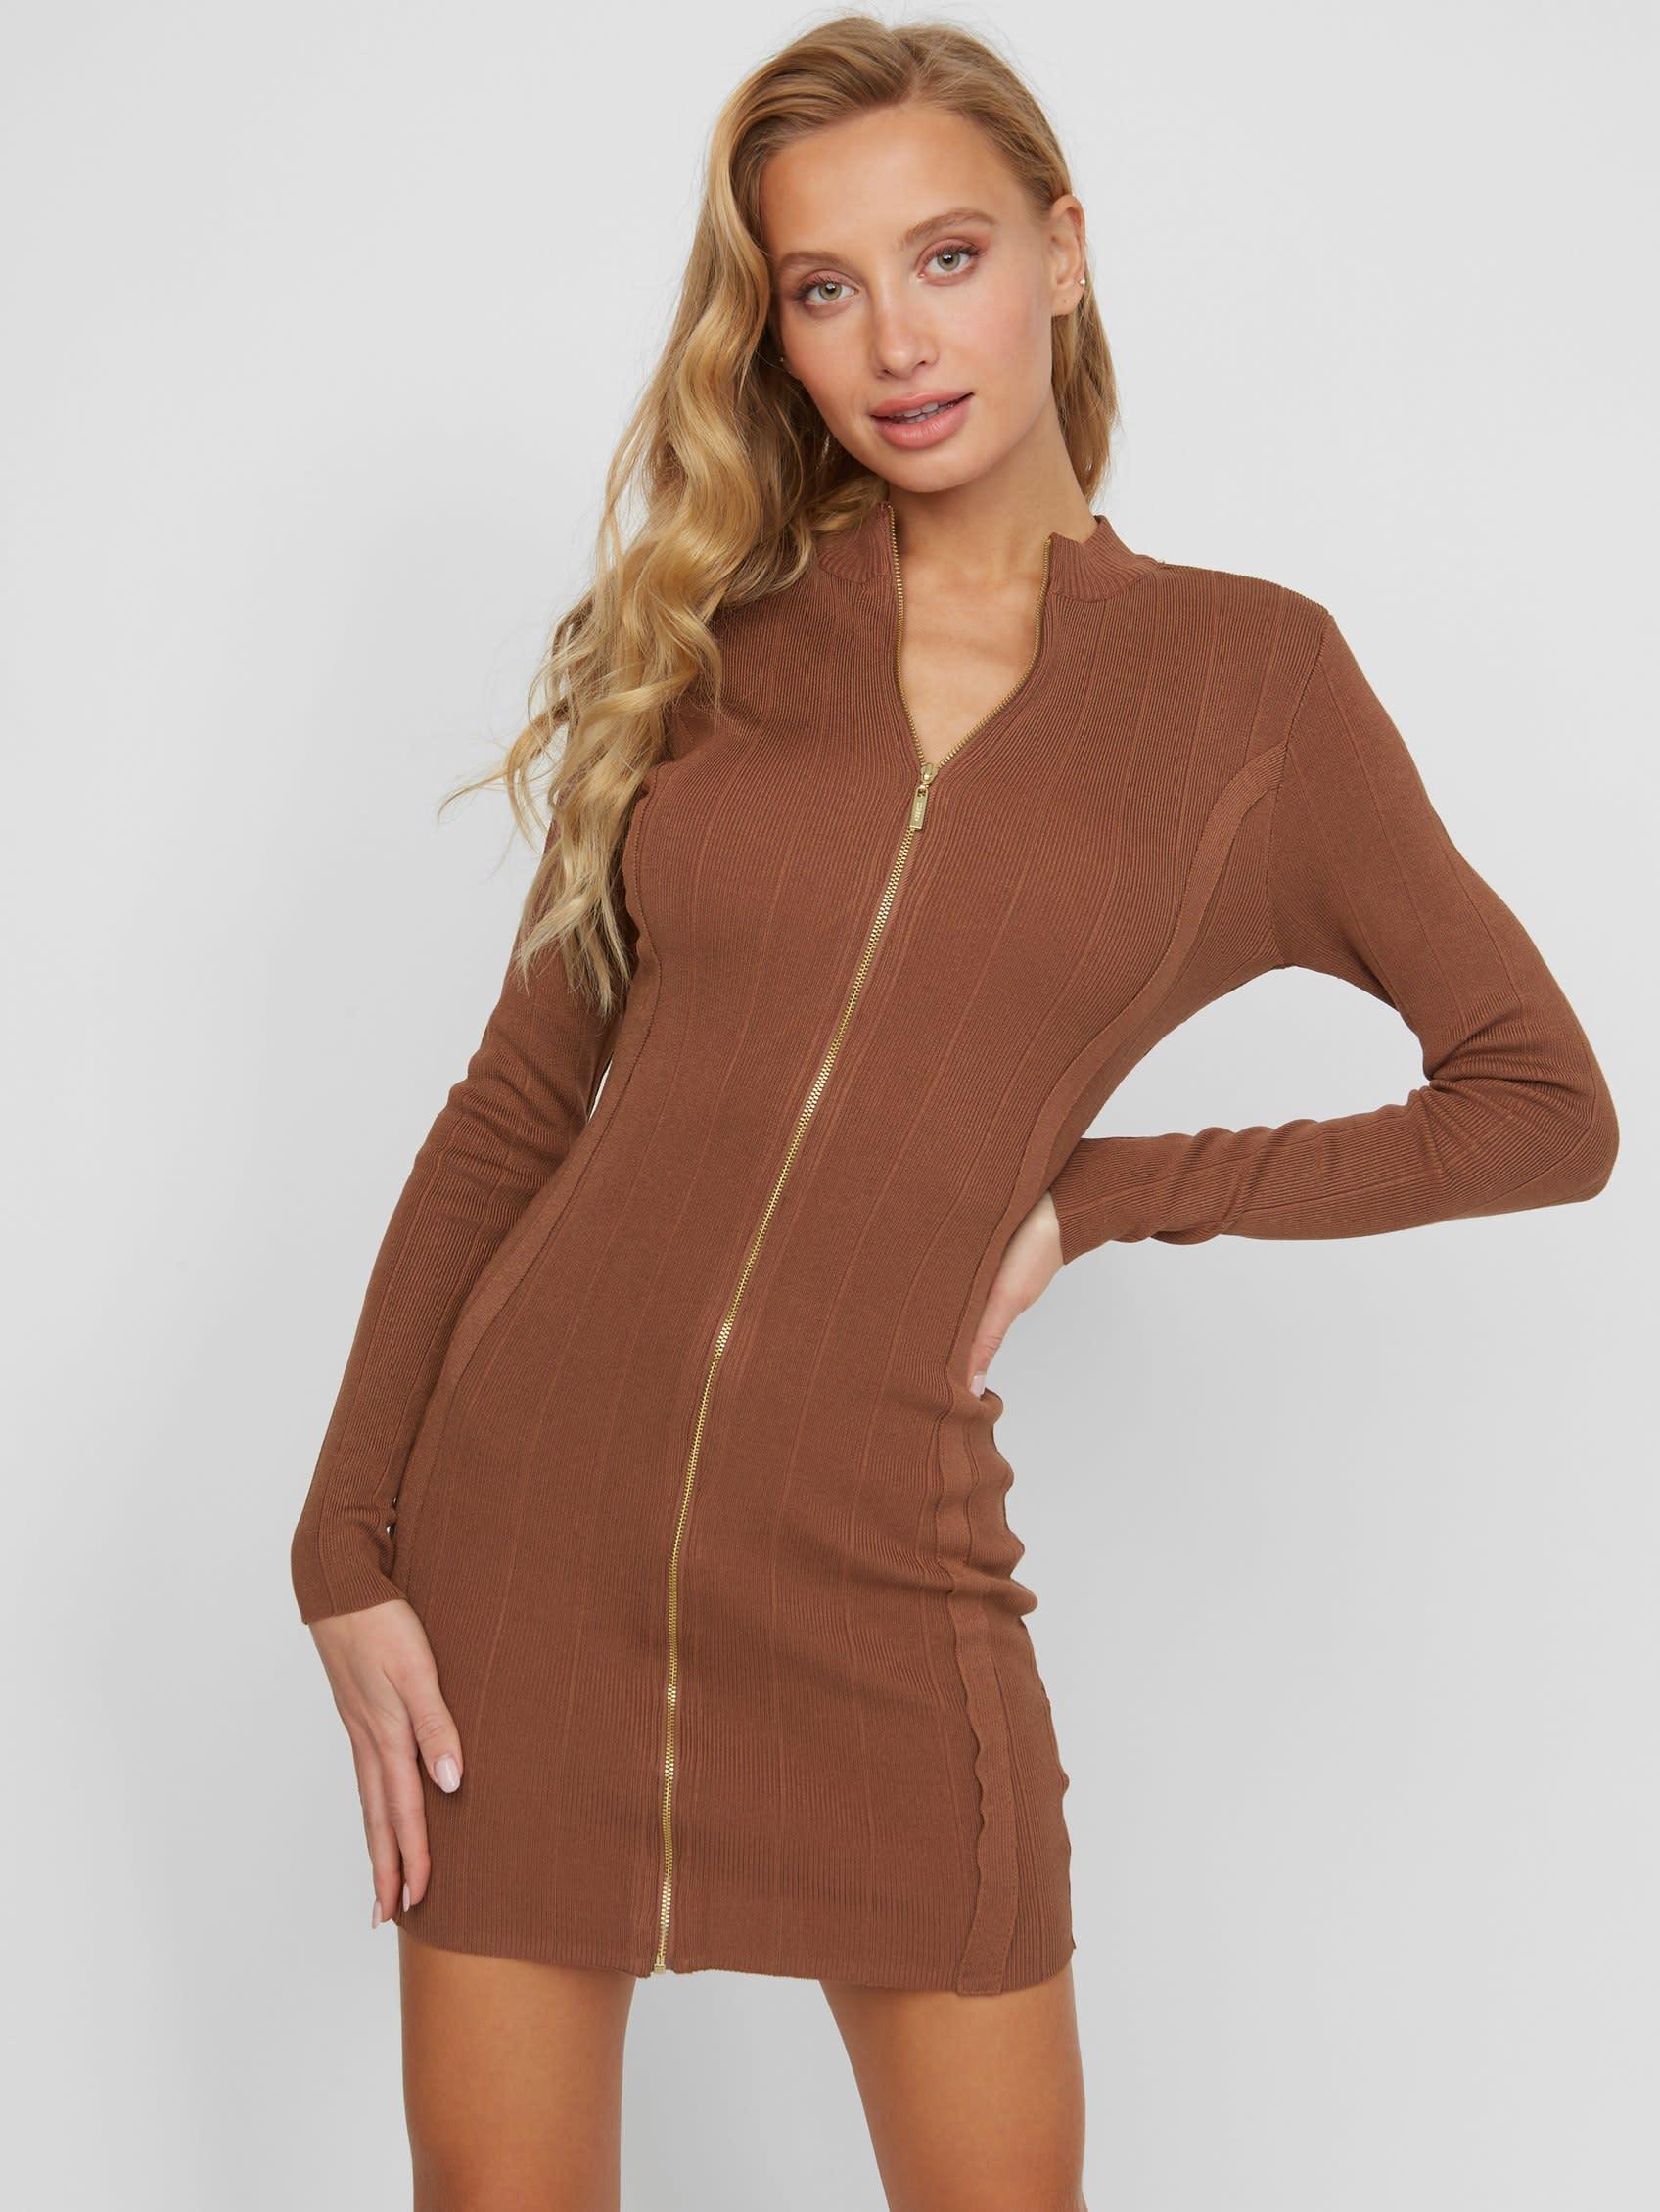 Guess Factory Danika Sweater Dress in Brown | Lyst